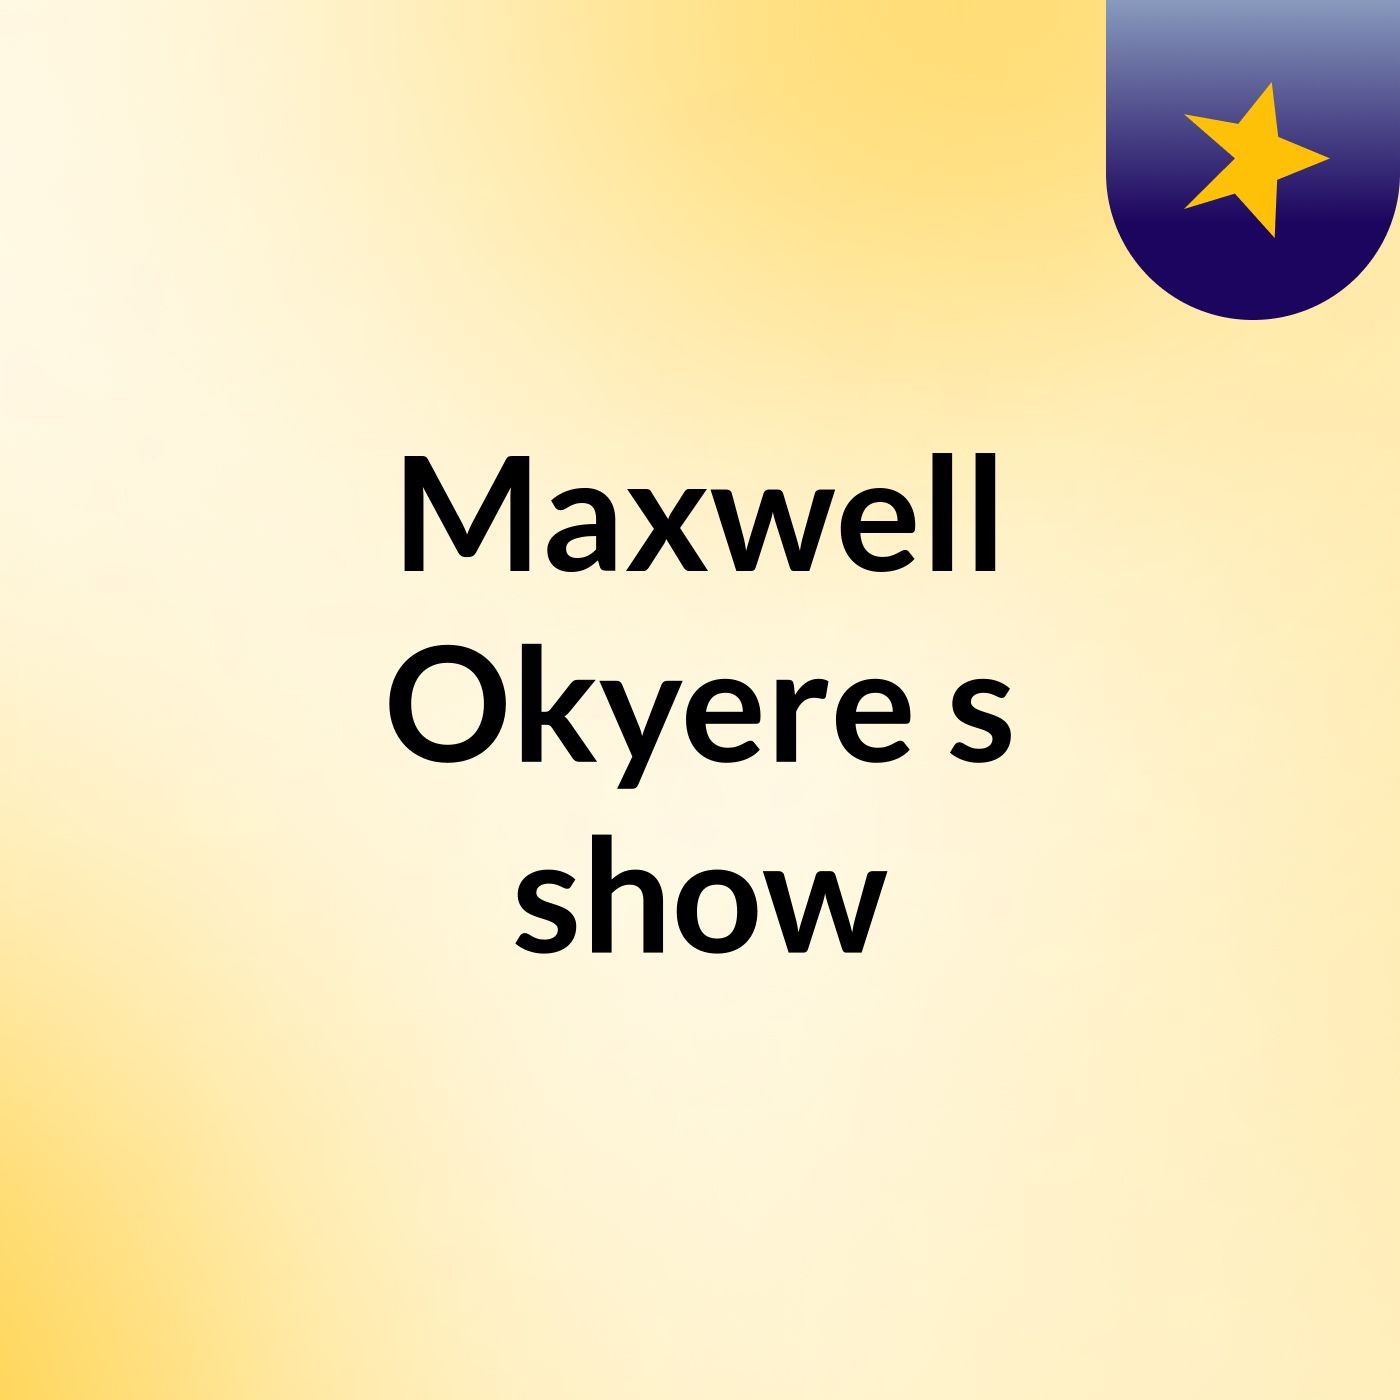 Maxwell Okyere's show